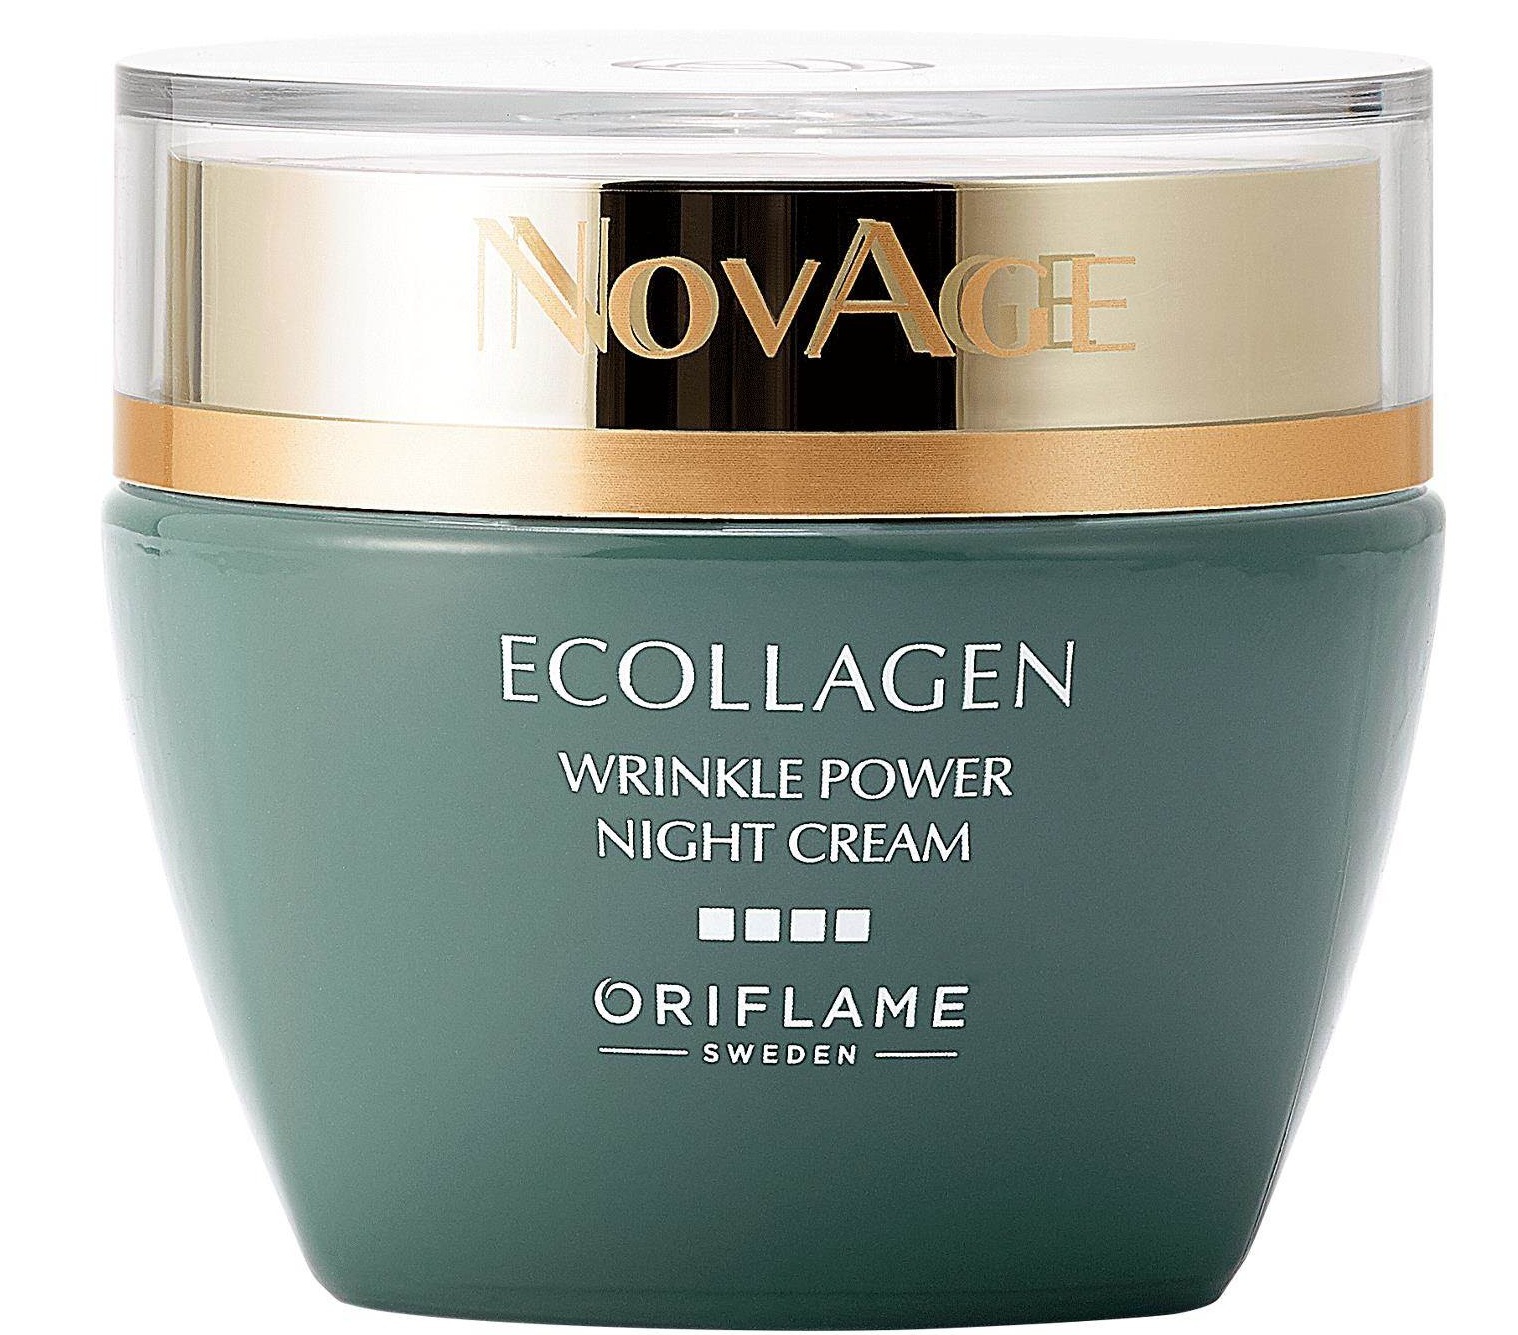 Oriflame Novage Ecollagen Wrinkle Power Night Cream